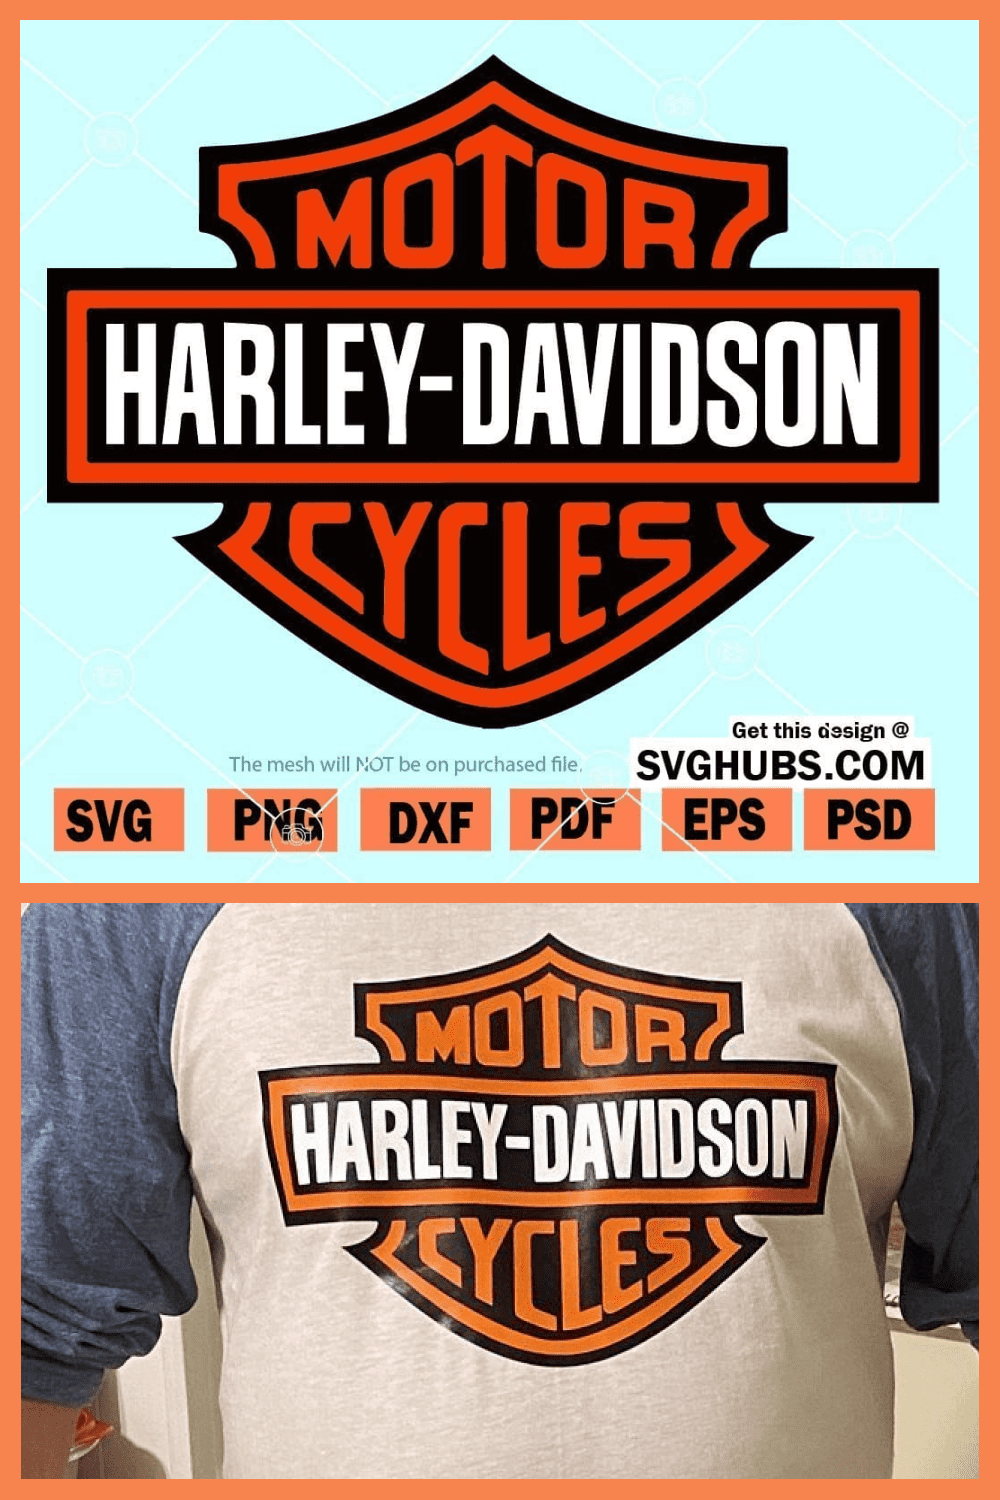 Harley Davidson logo svg.